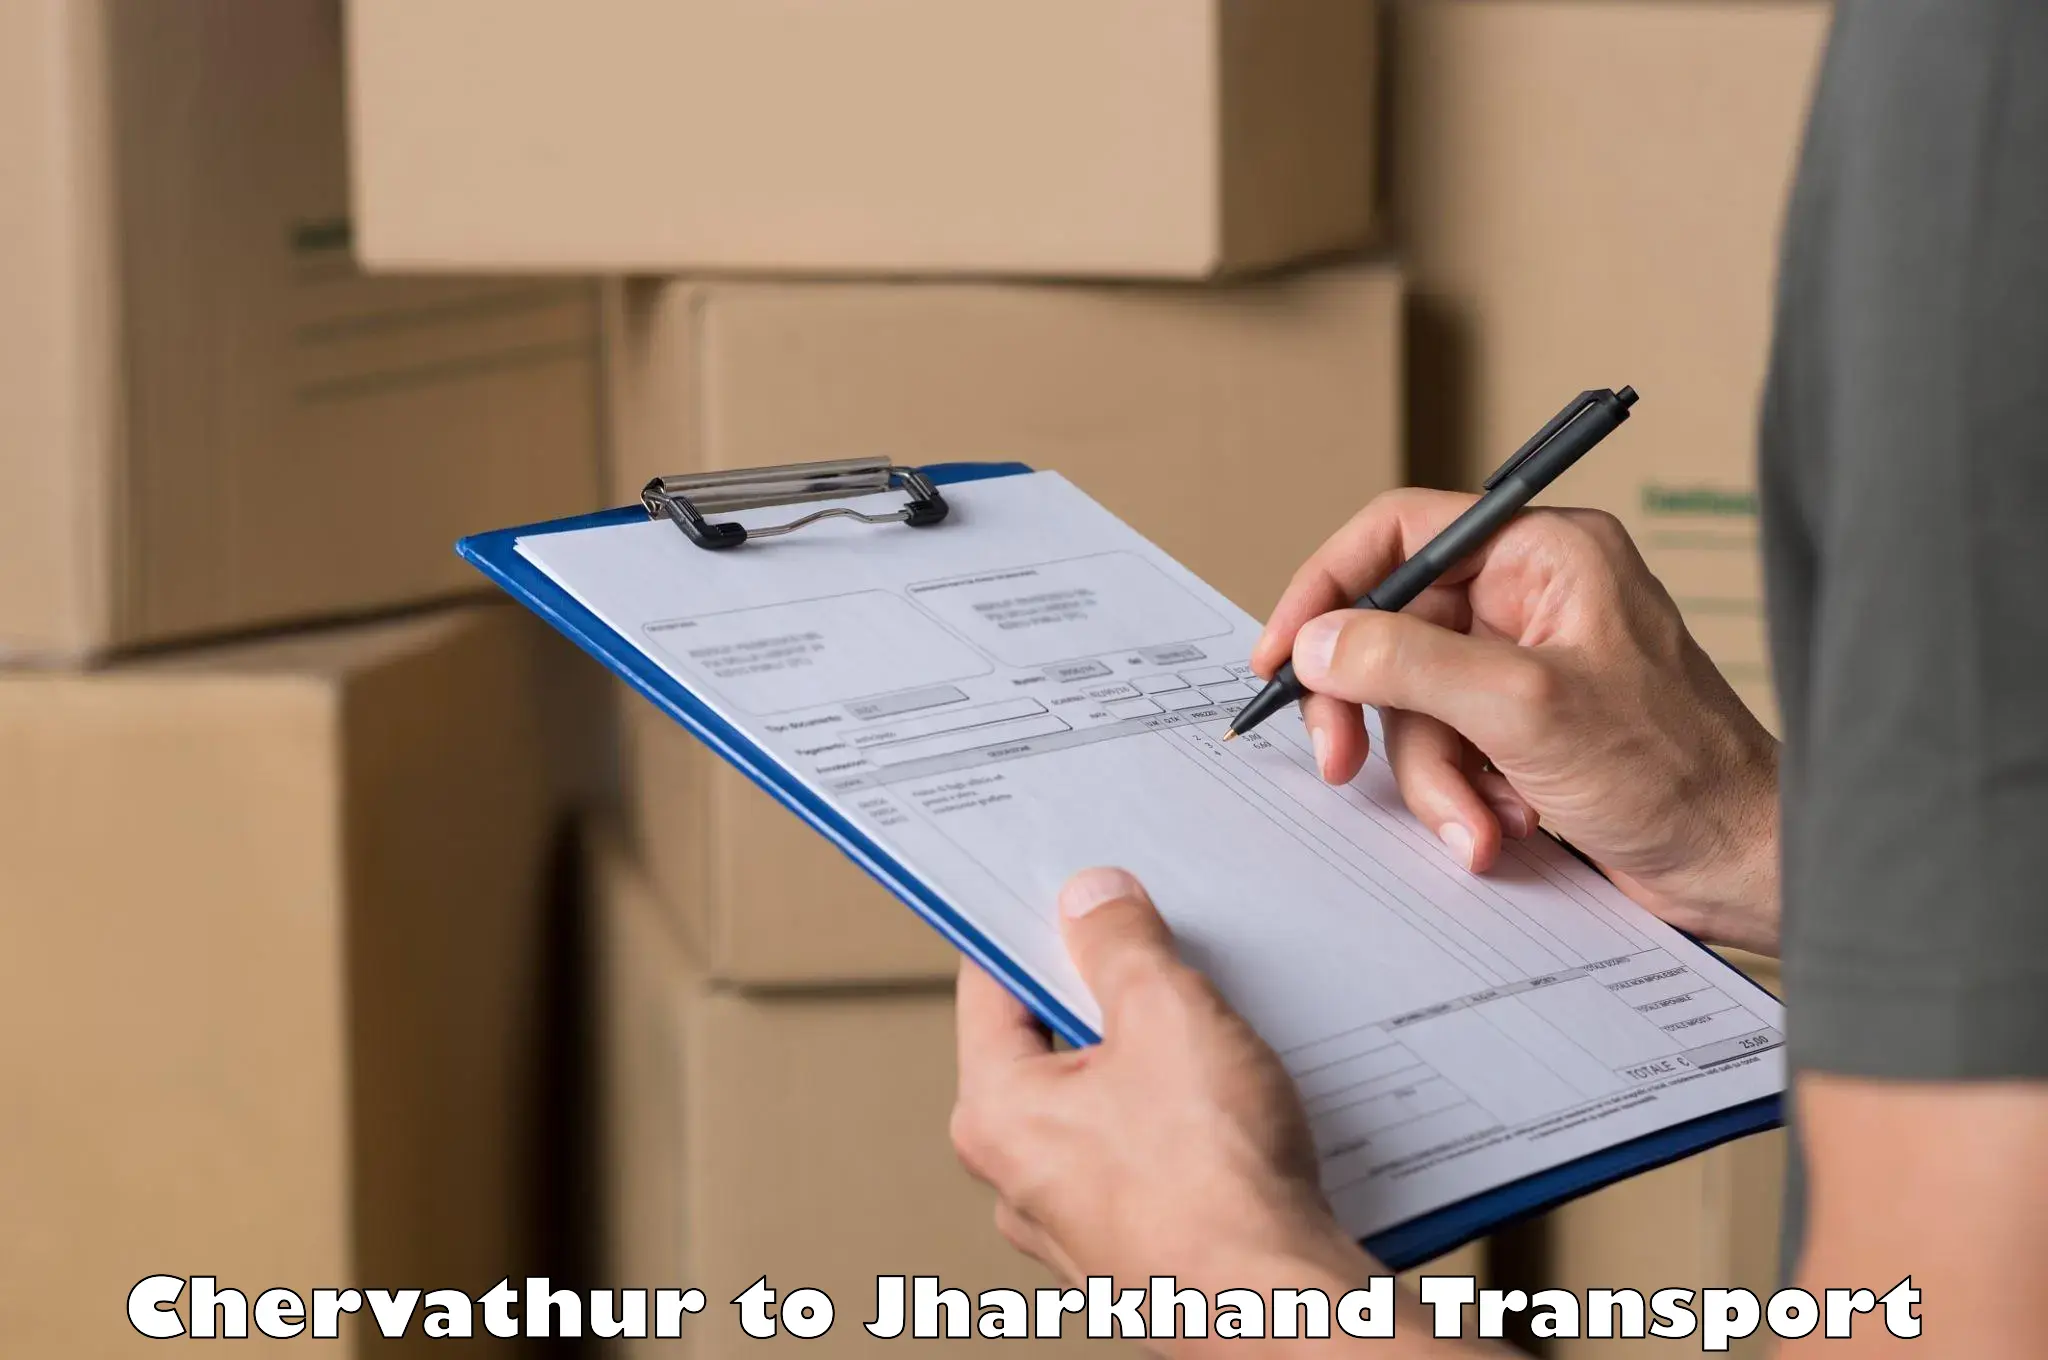 Furniture transport service Chervathur to IIT Dhanbad